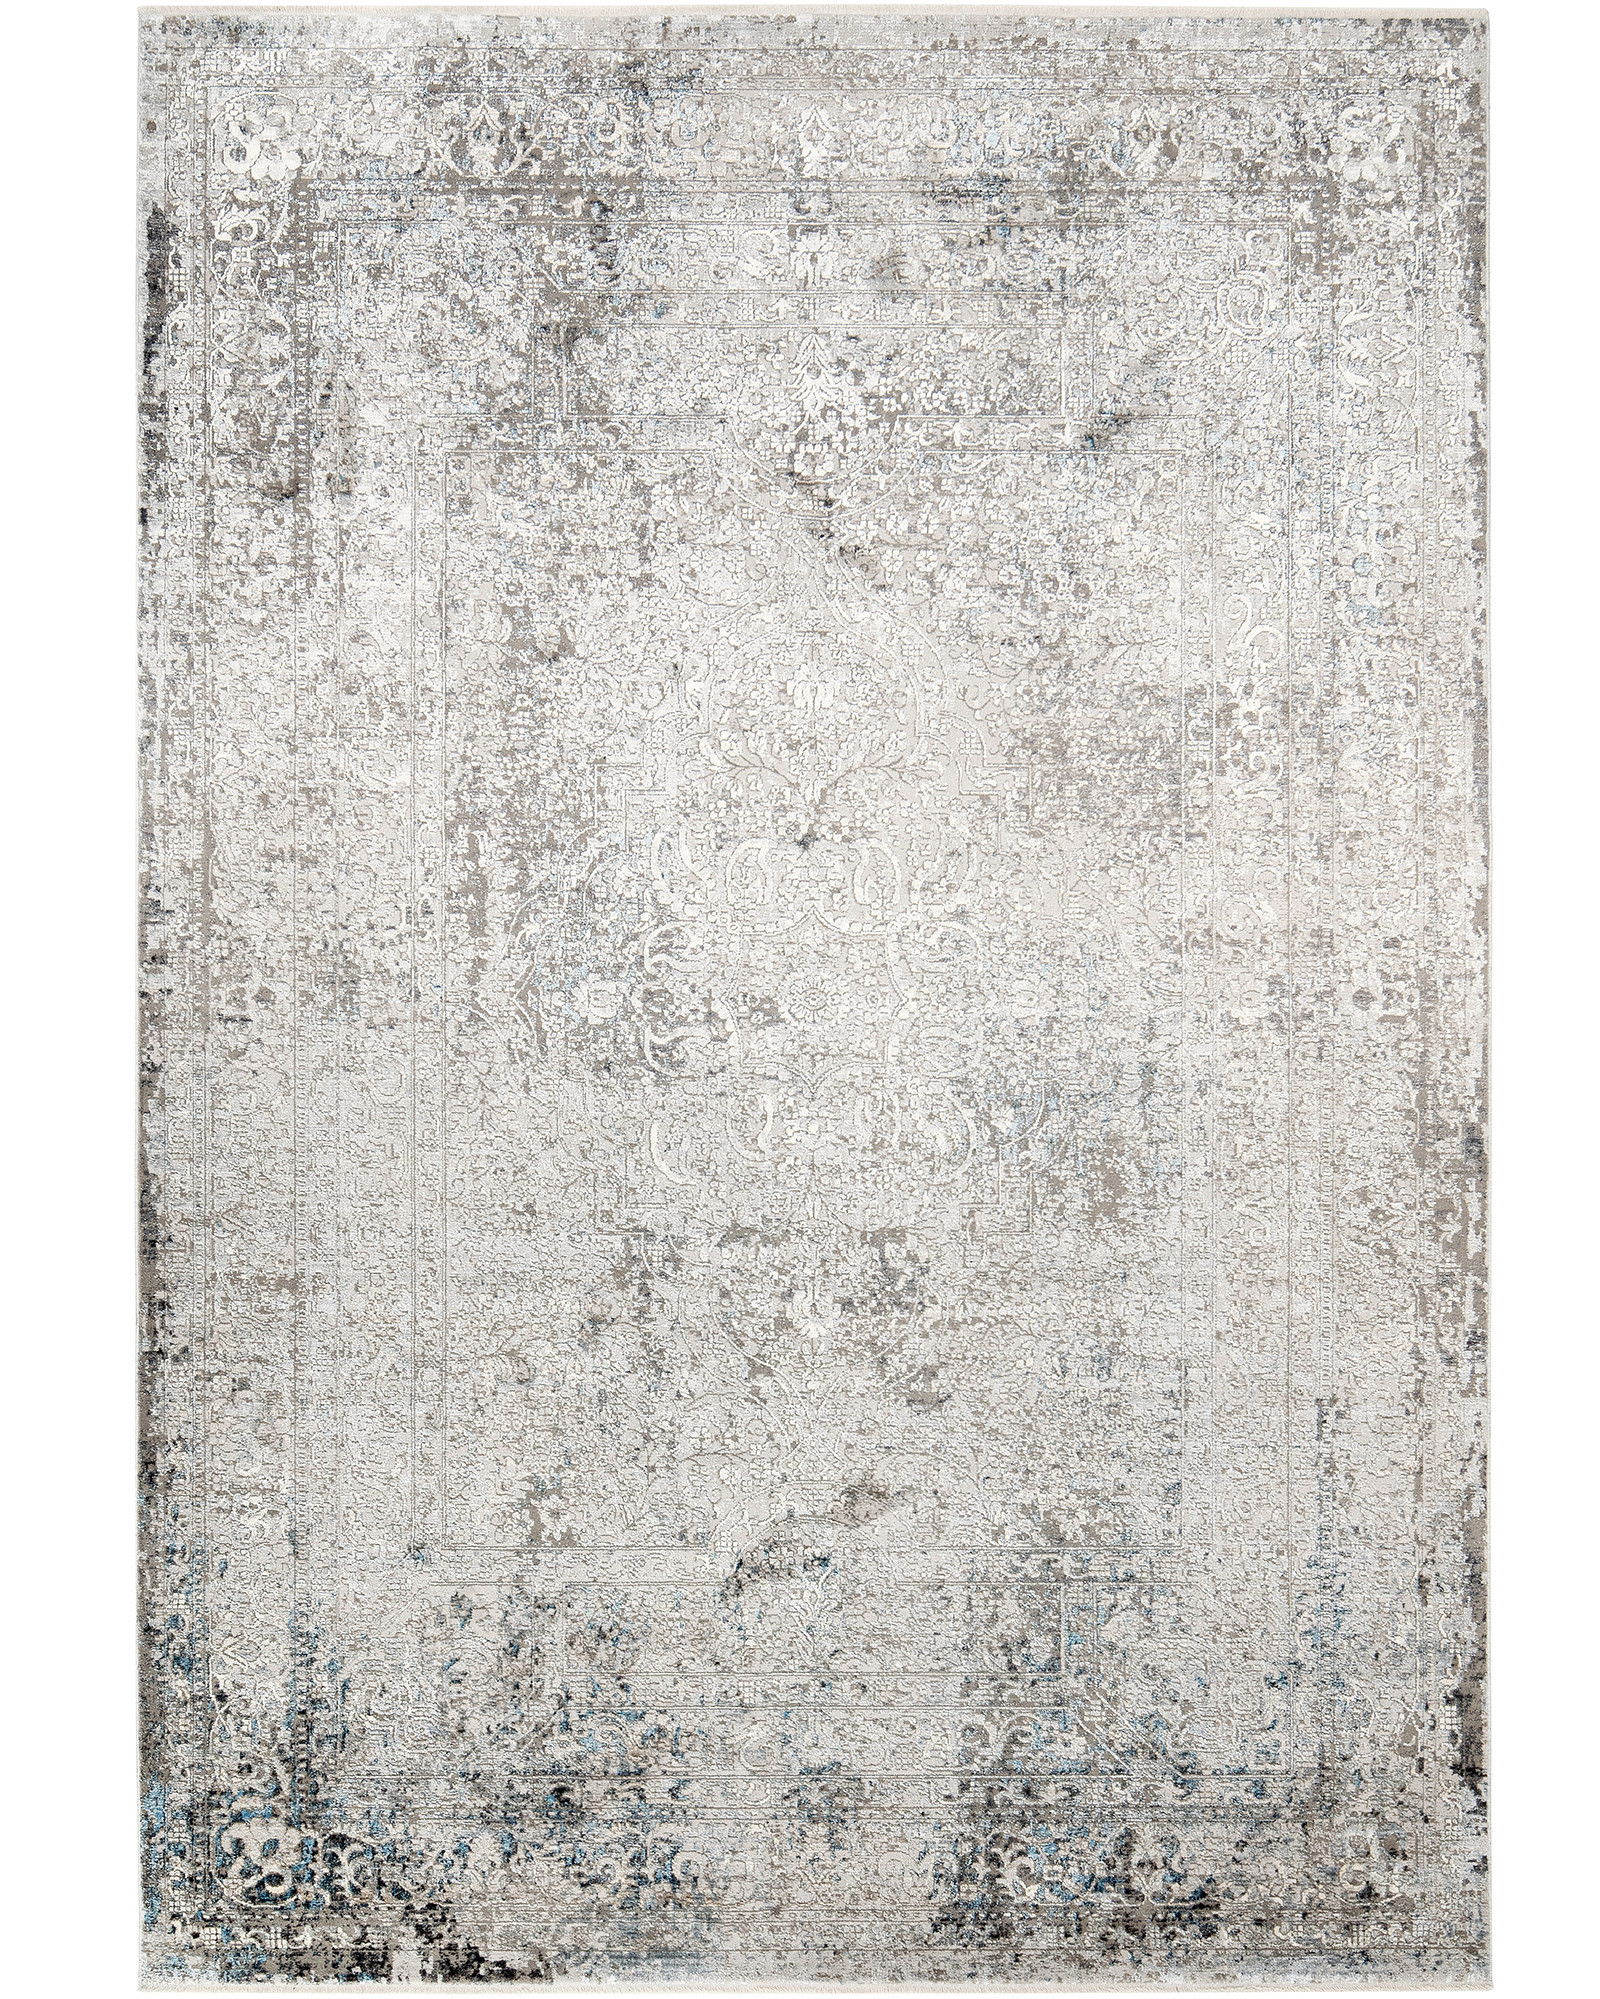 Jacob Azure 500 x 300 cm Carpet Knot Home Designer Rug for Bedroom Living Dining Room Office Soft Non-slip Area Textile Decor